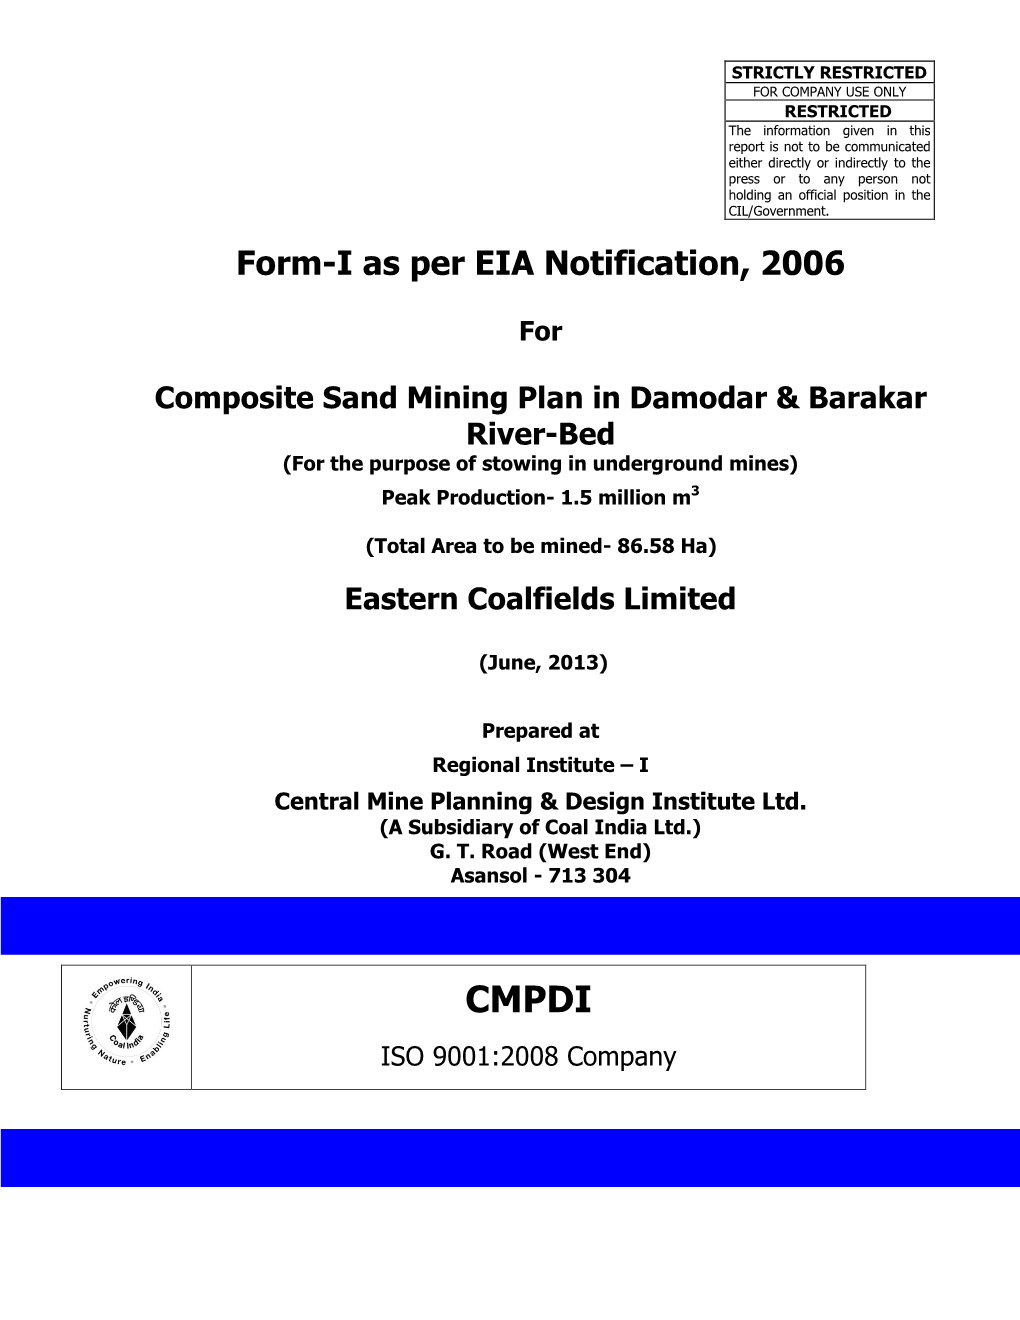 Form-I As Per EIA Notification, 2006 for Composite Sand Mining Plan in Damodar & Barakar Riverbed, Eastern Coalfields Ltd